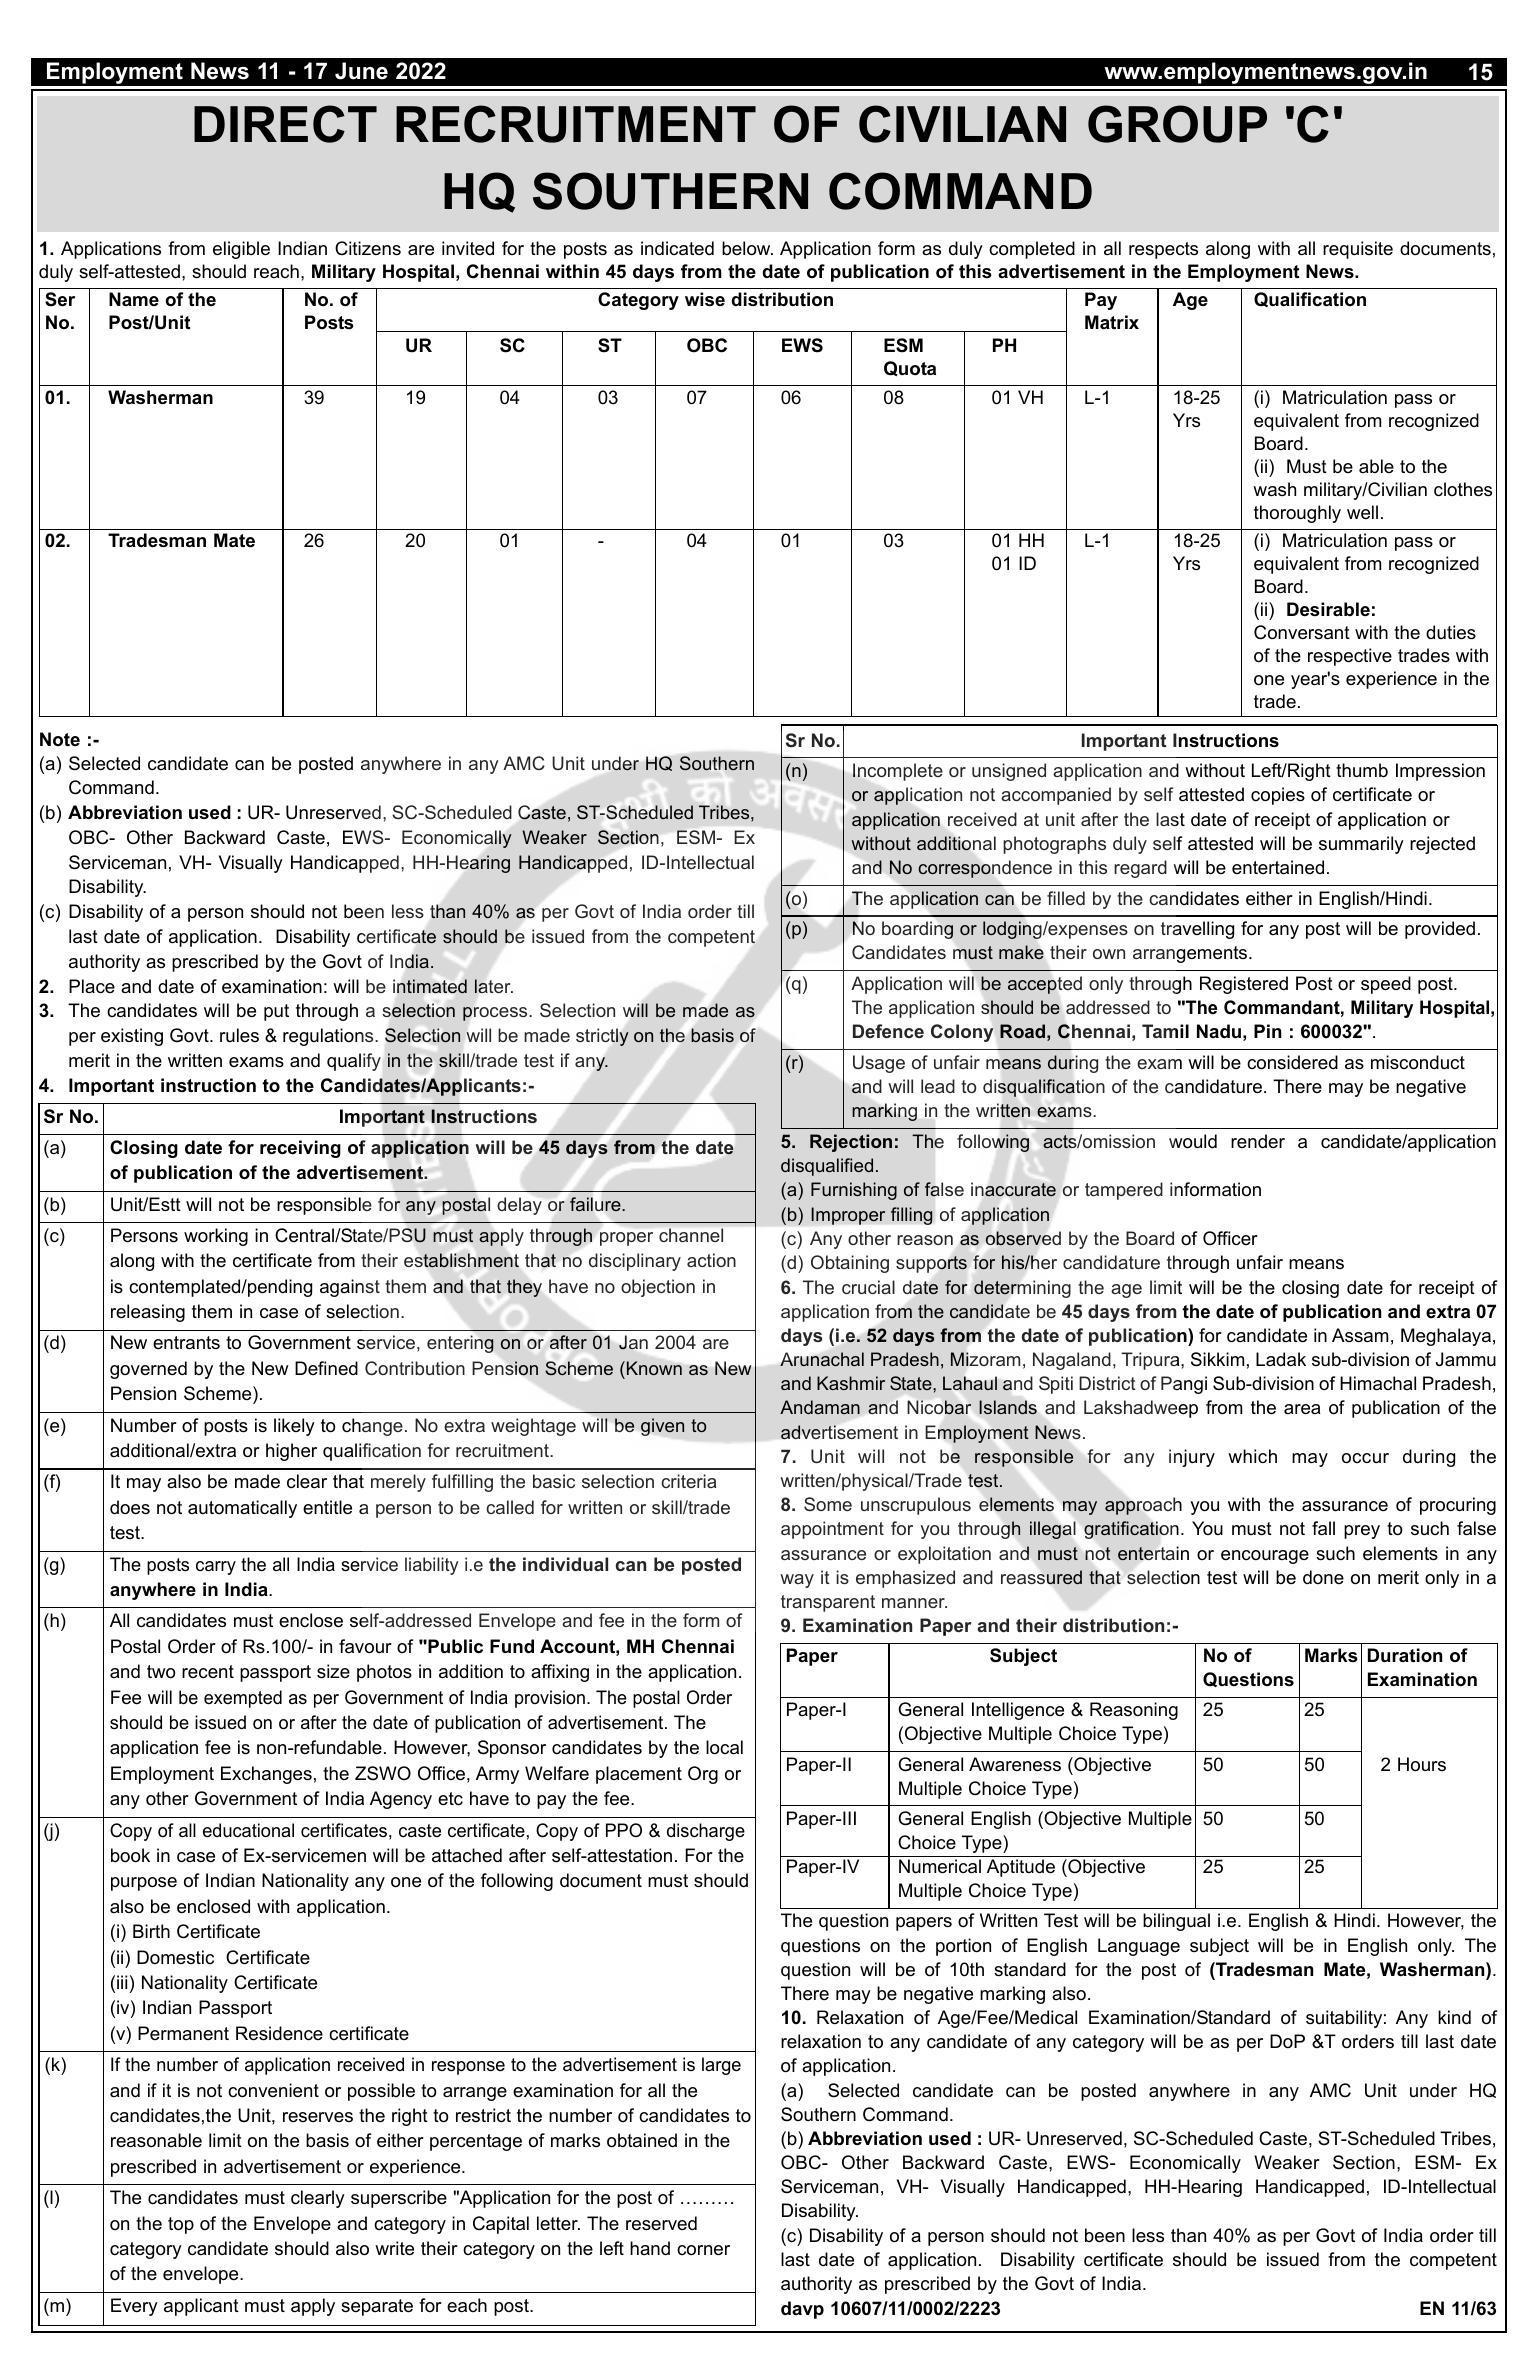 HQ Southern Command Chennai (Military Hospital Chennai) Recruitment 2022 - Page 1